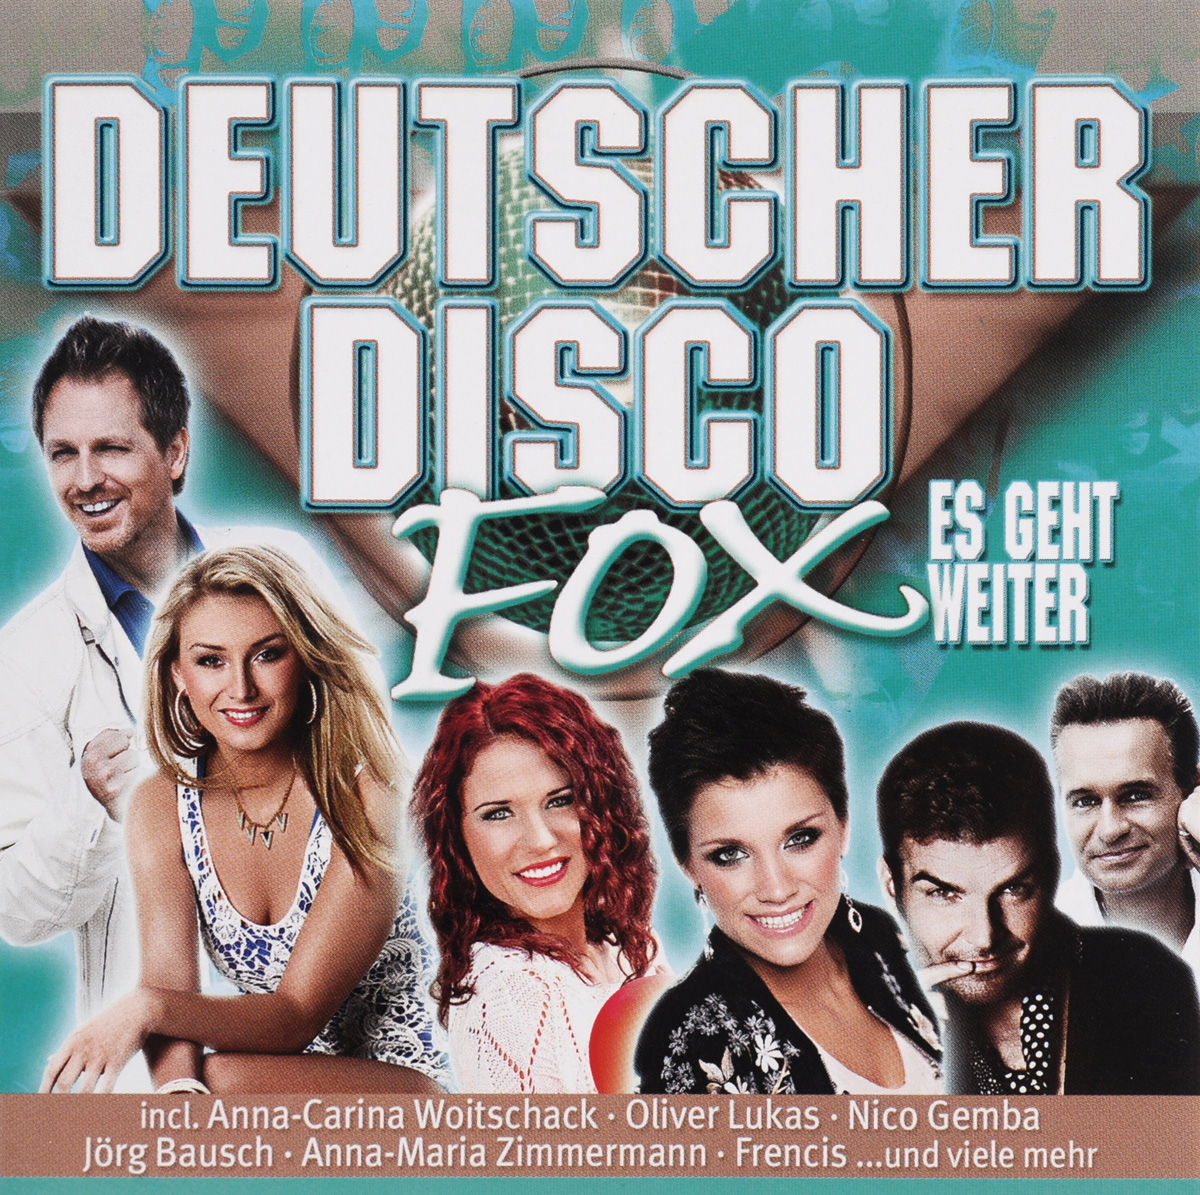 VARIOUS ARTISTS Deutscher Disco Fox 2013 - Die 2CD